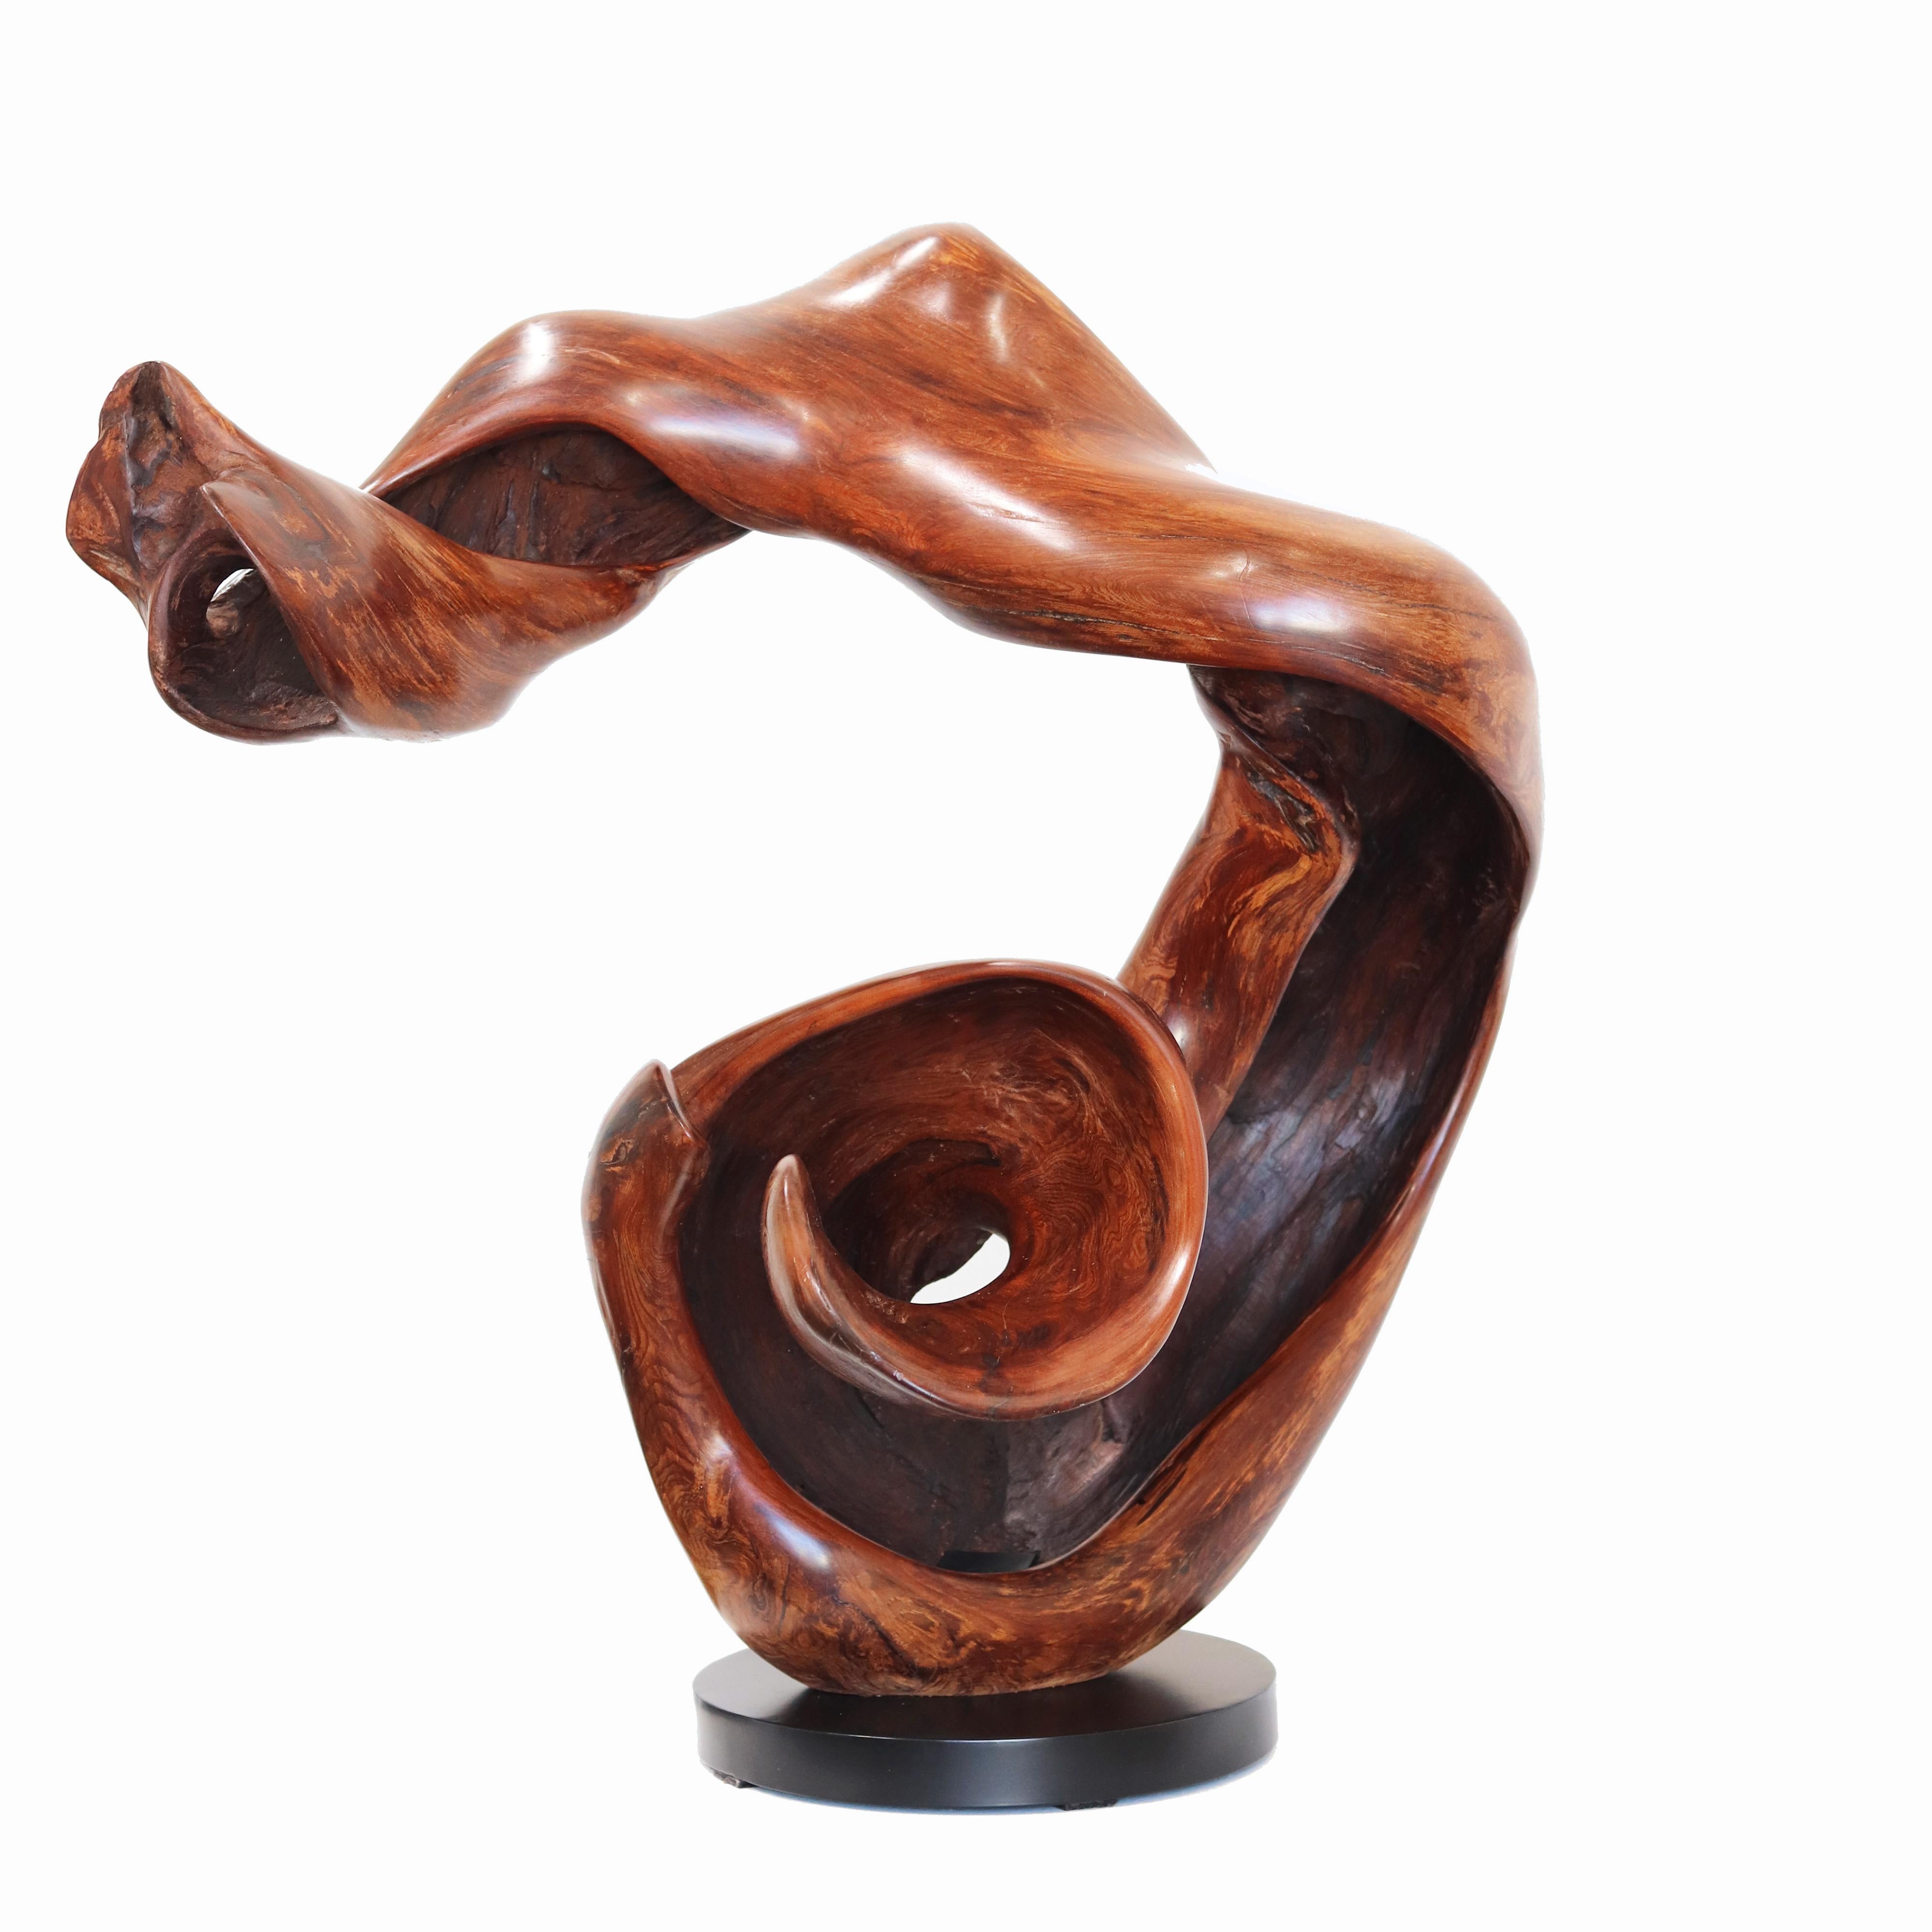 Boundless - Original Large Organic Spiral Redwood Sculpture  - Mixed Media Art by Joe Garnero